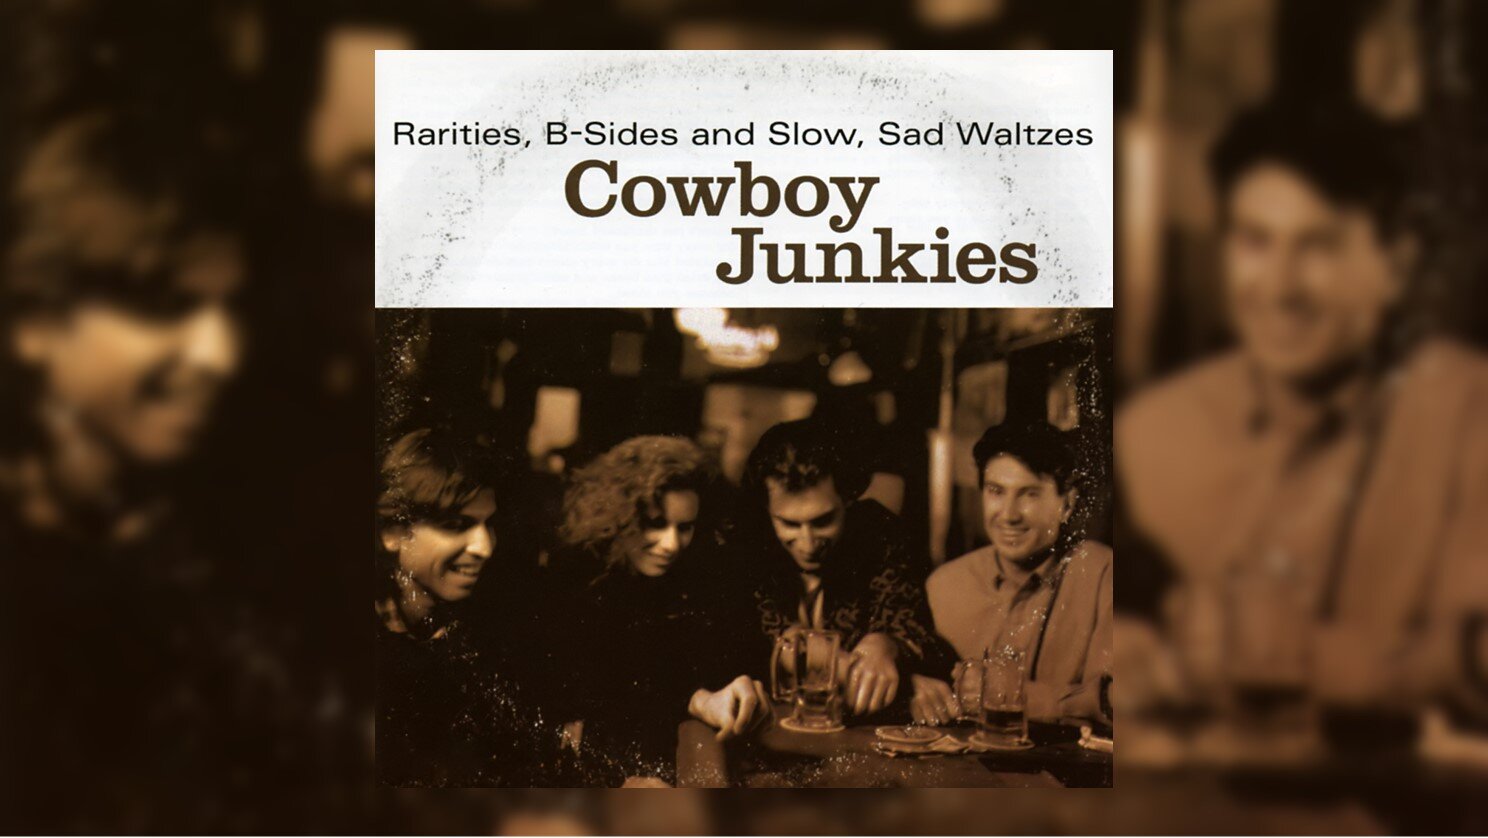 B-Sides and Slow Sad Waltzes Cowboy Junkies Rarities 